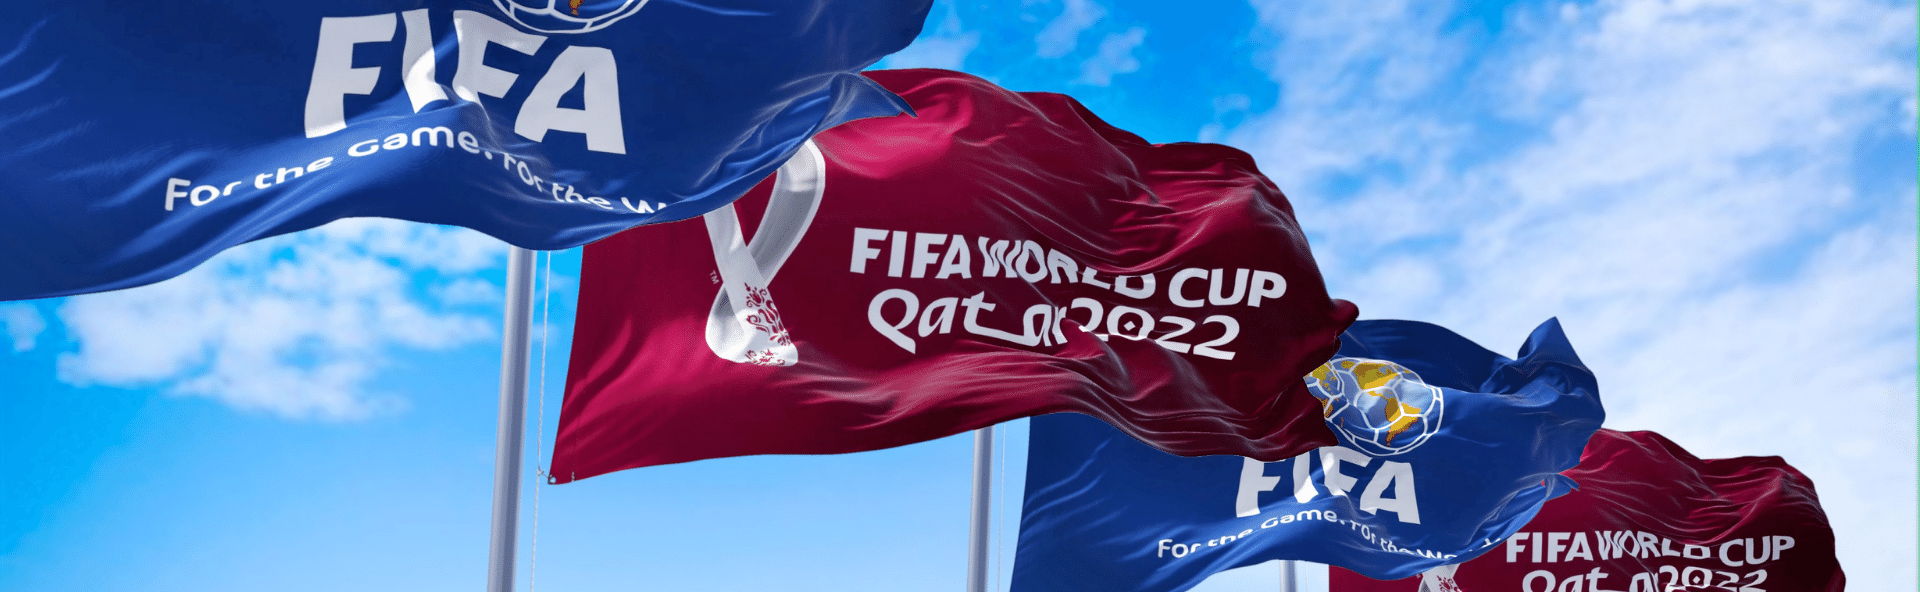 Qatar World Cup Flags (1) - DG website (1920 x 592) -1